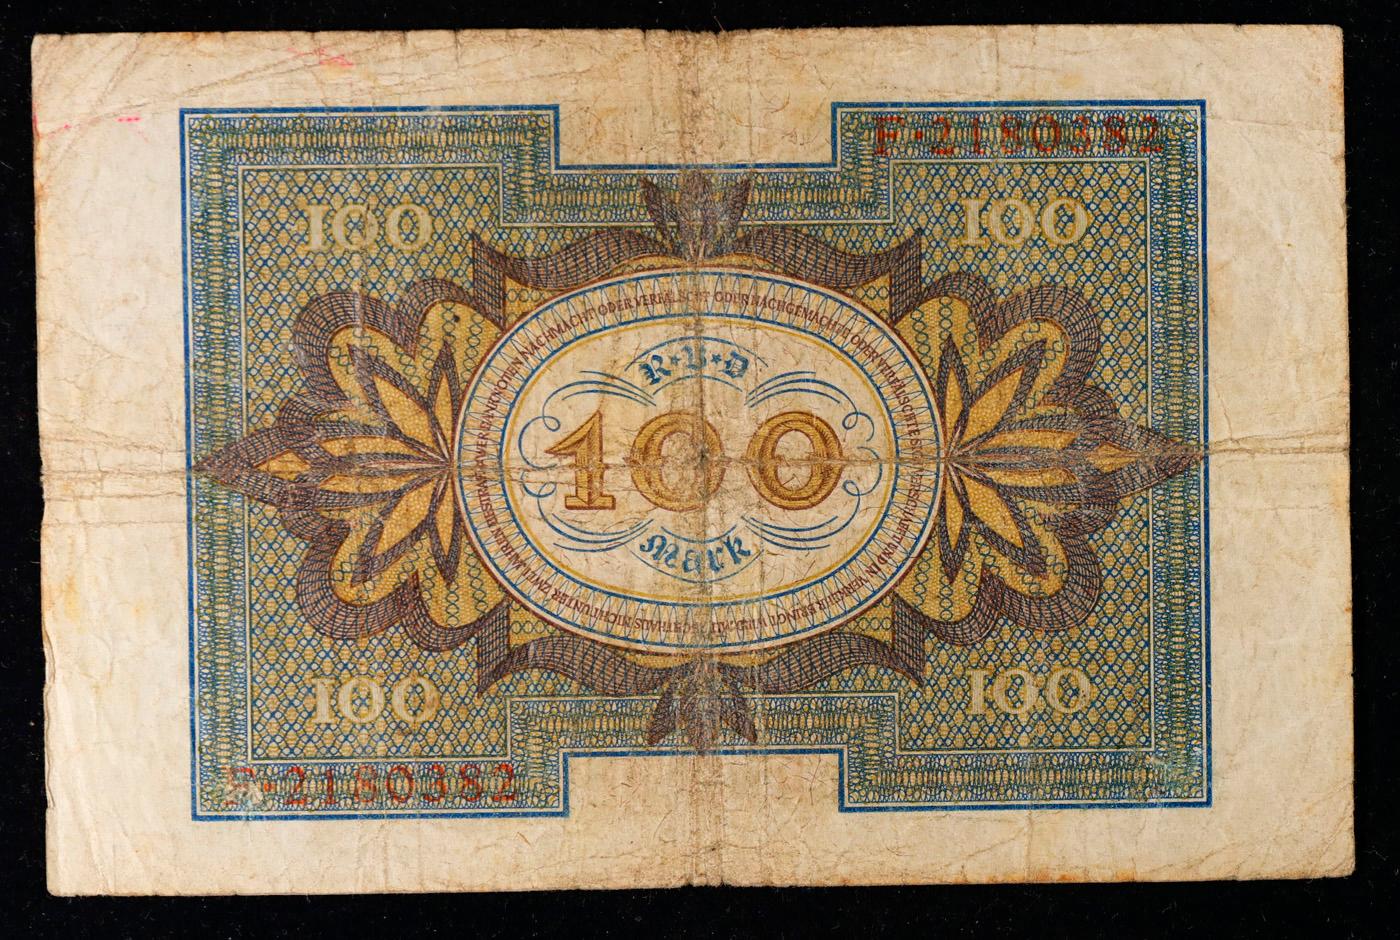 1920 Germany (WWI Era) 100 Marks Banknote P# 69a Grades vf+